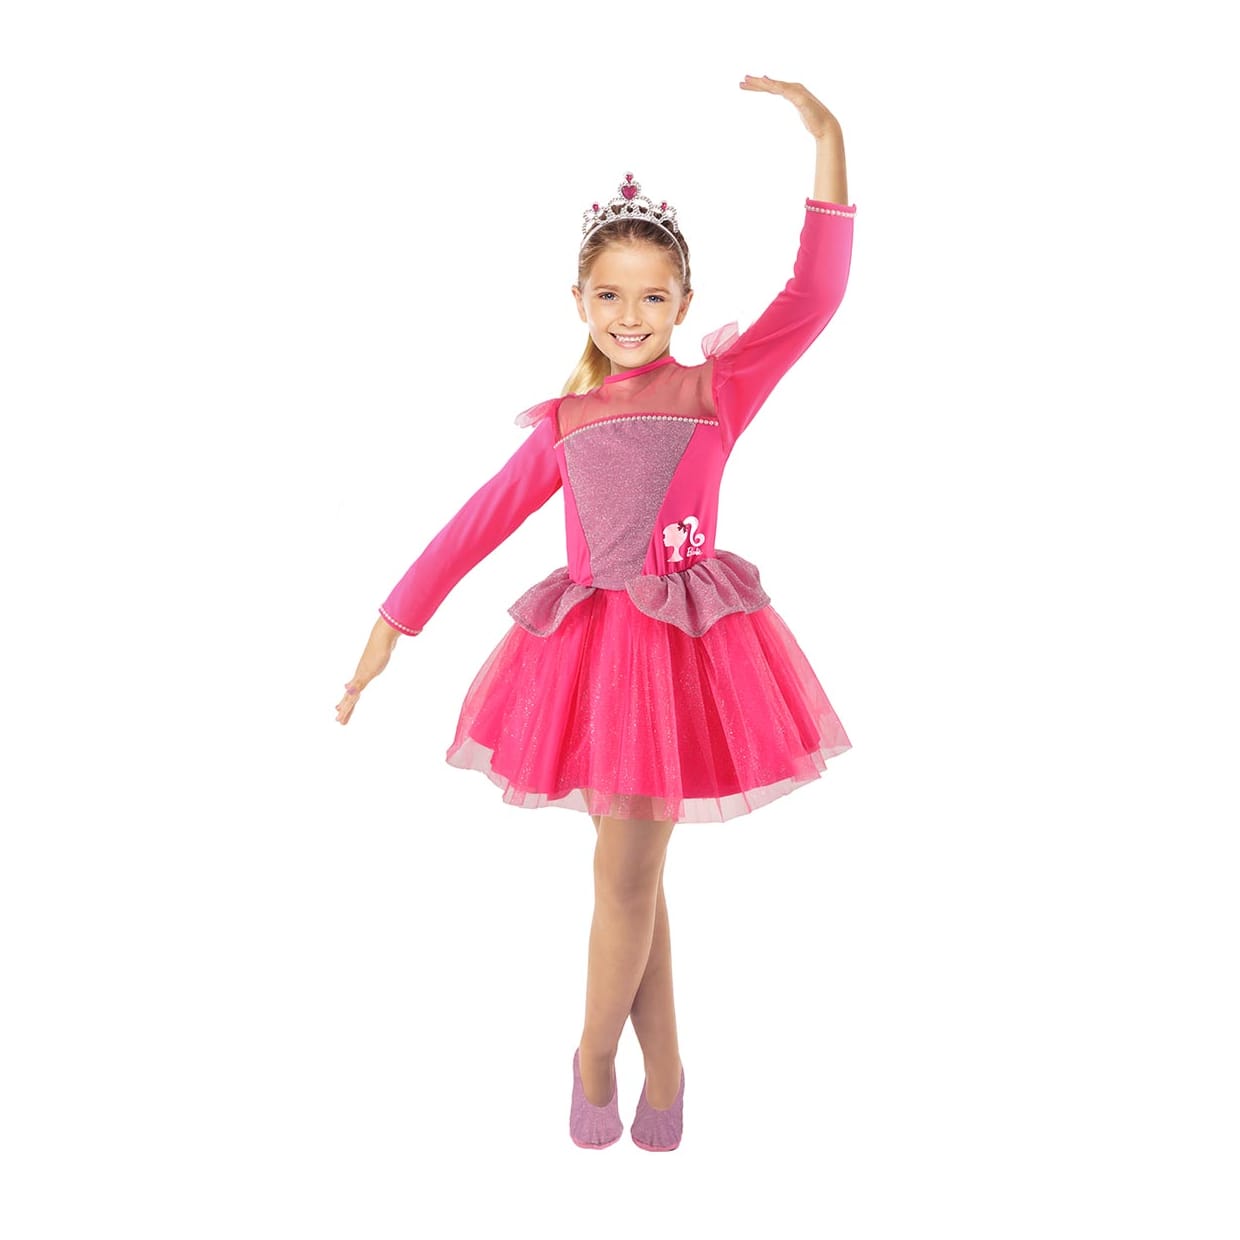 Ciao! Barbie Ballerina Costume 3-4